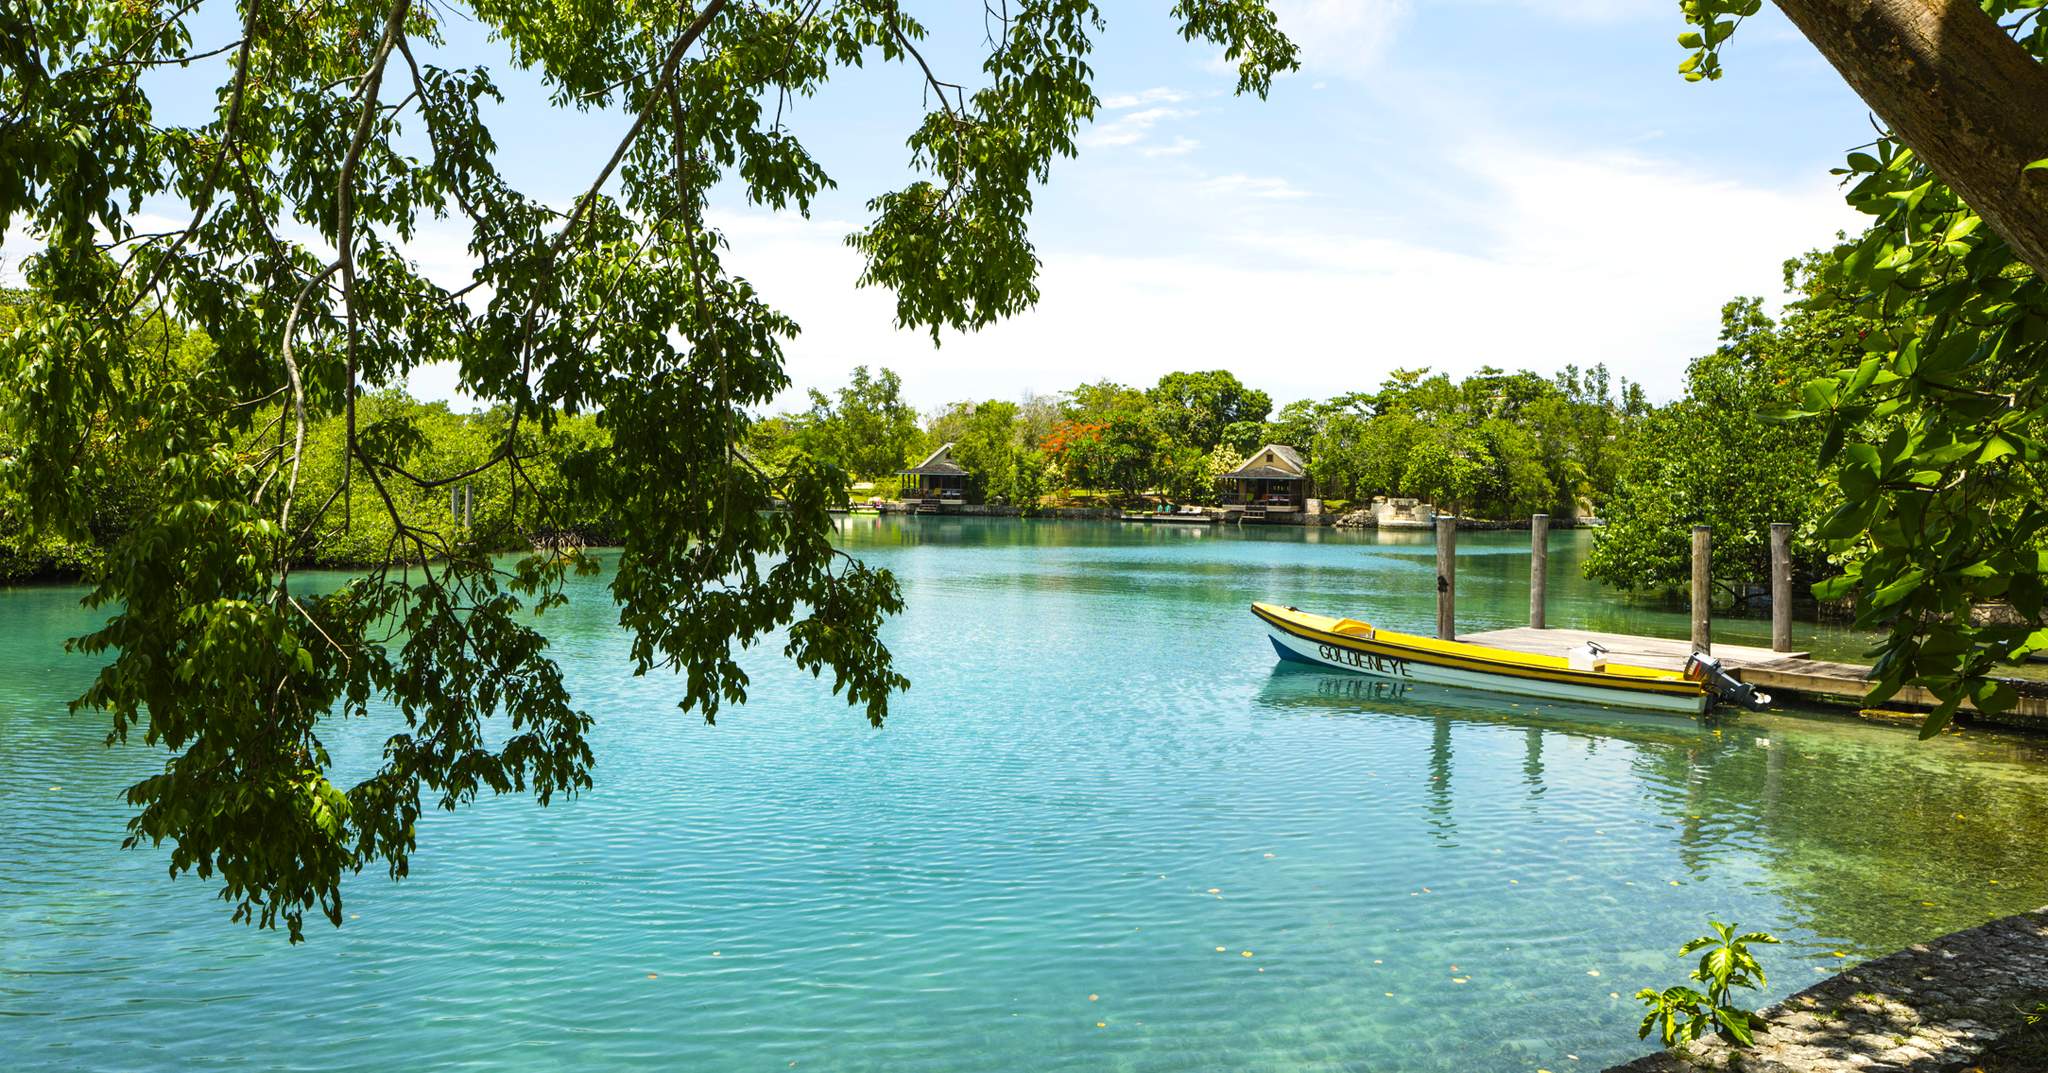 The Blue Lagoon of GoldenEye Jamaica